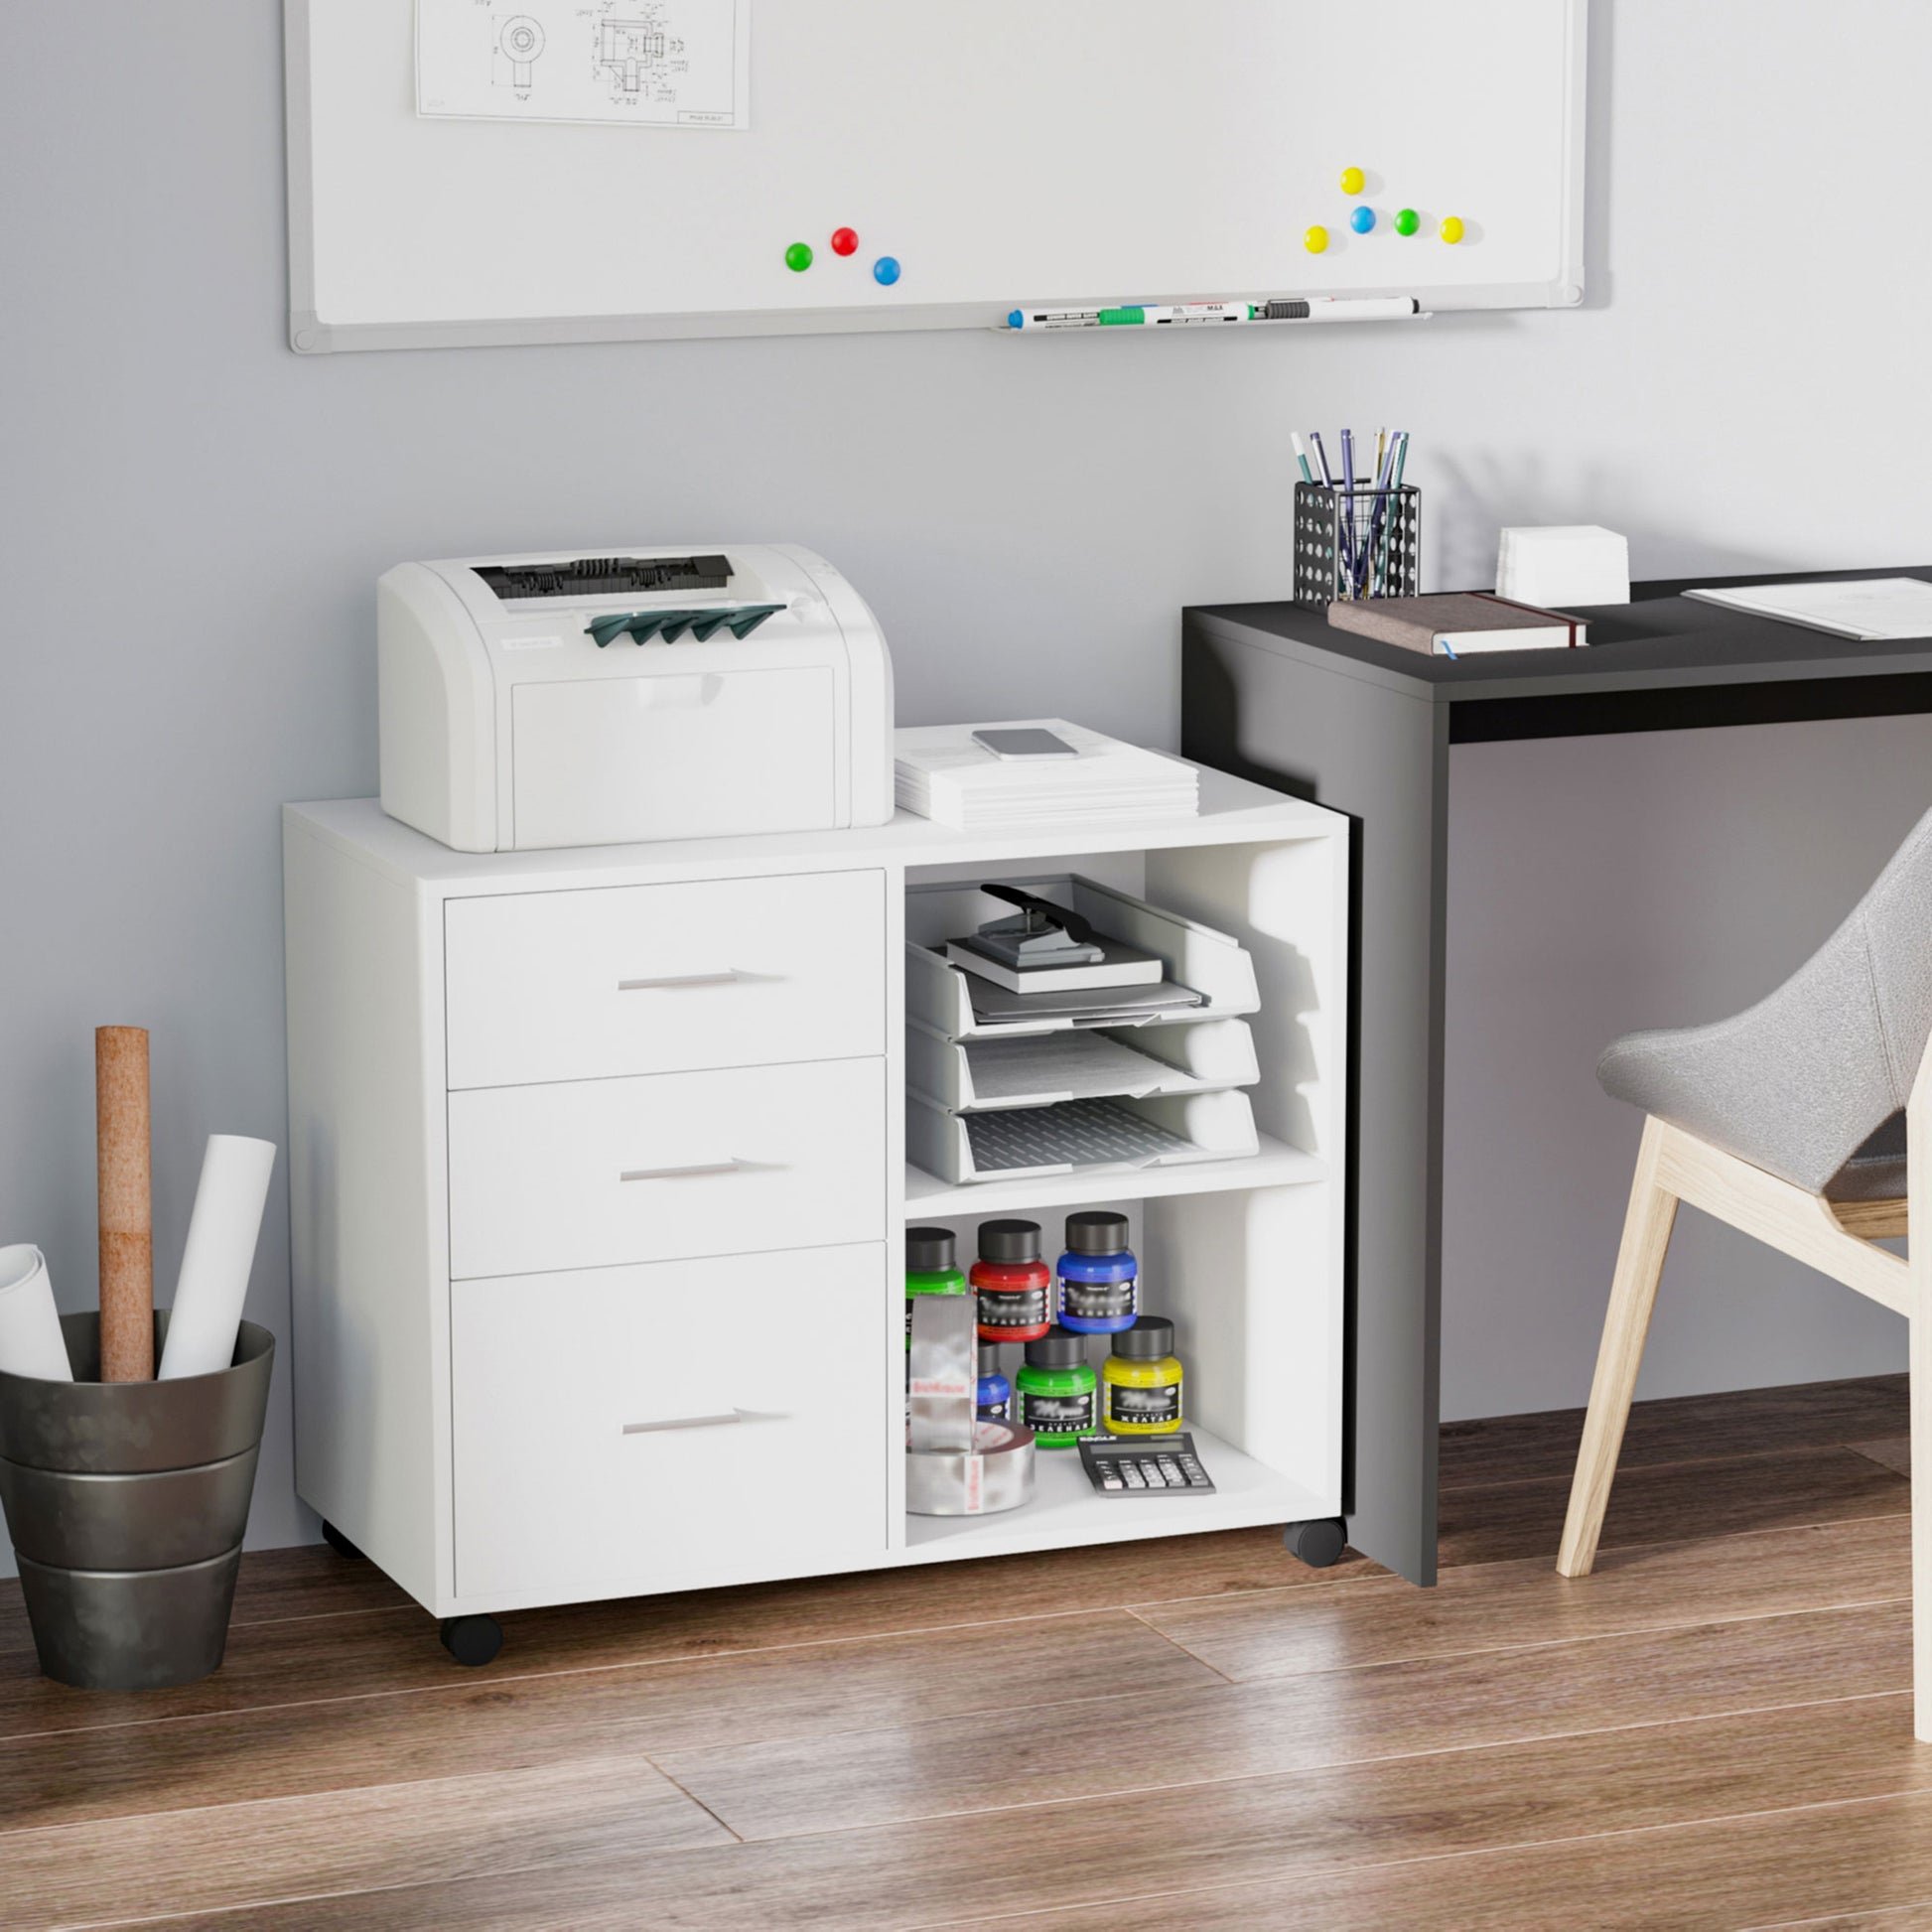 Mueble para Impresora con Ruedas, Mesa para impresora multifuncional